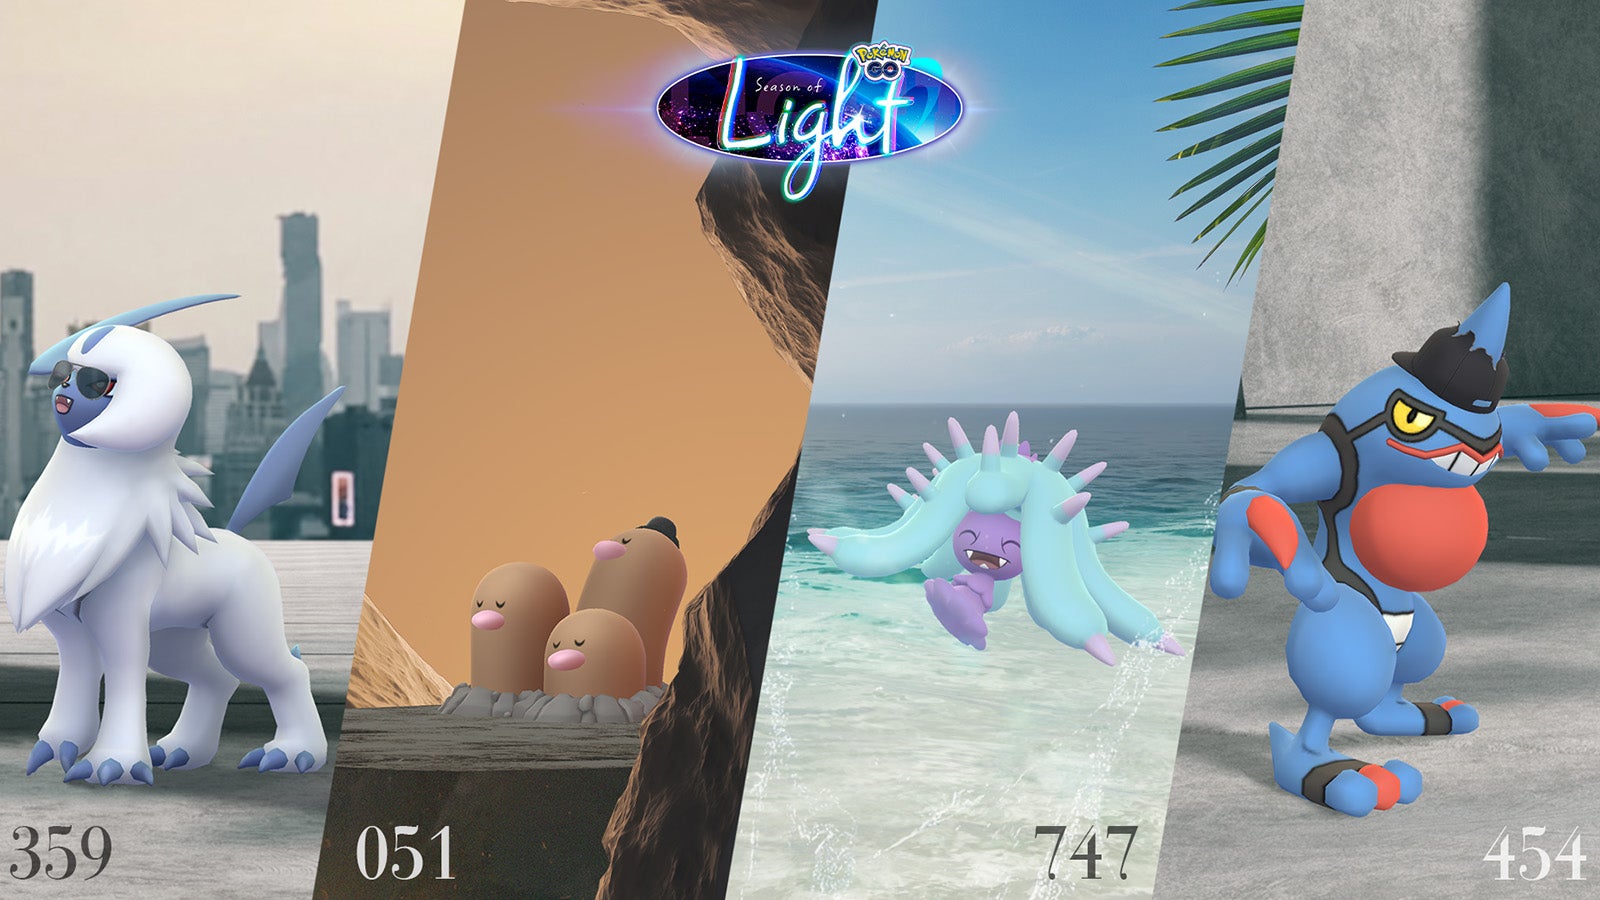 Afbeeldingen van Pokémon Go Fashion Week 2022 uitgelegd